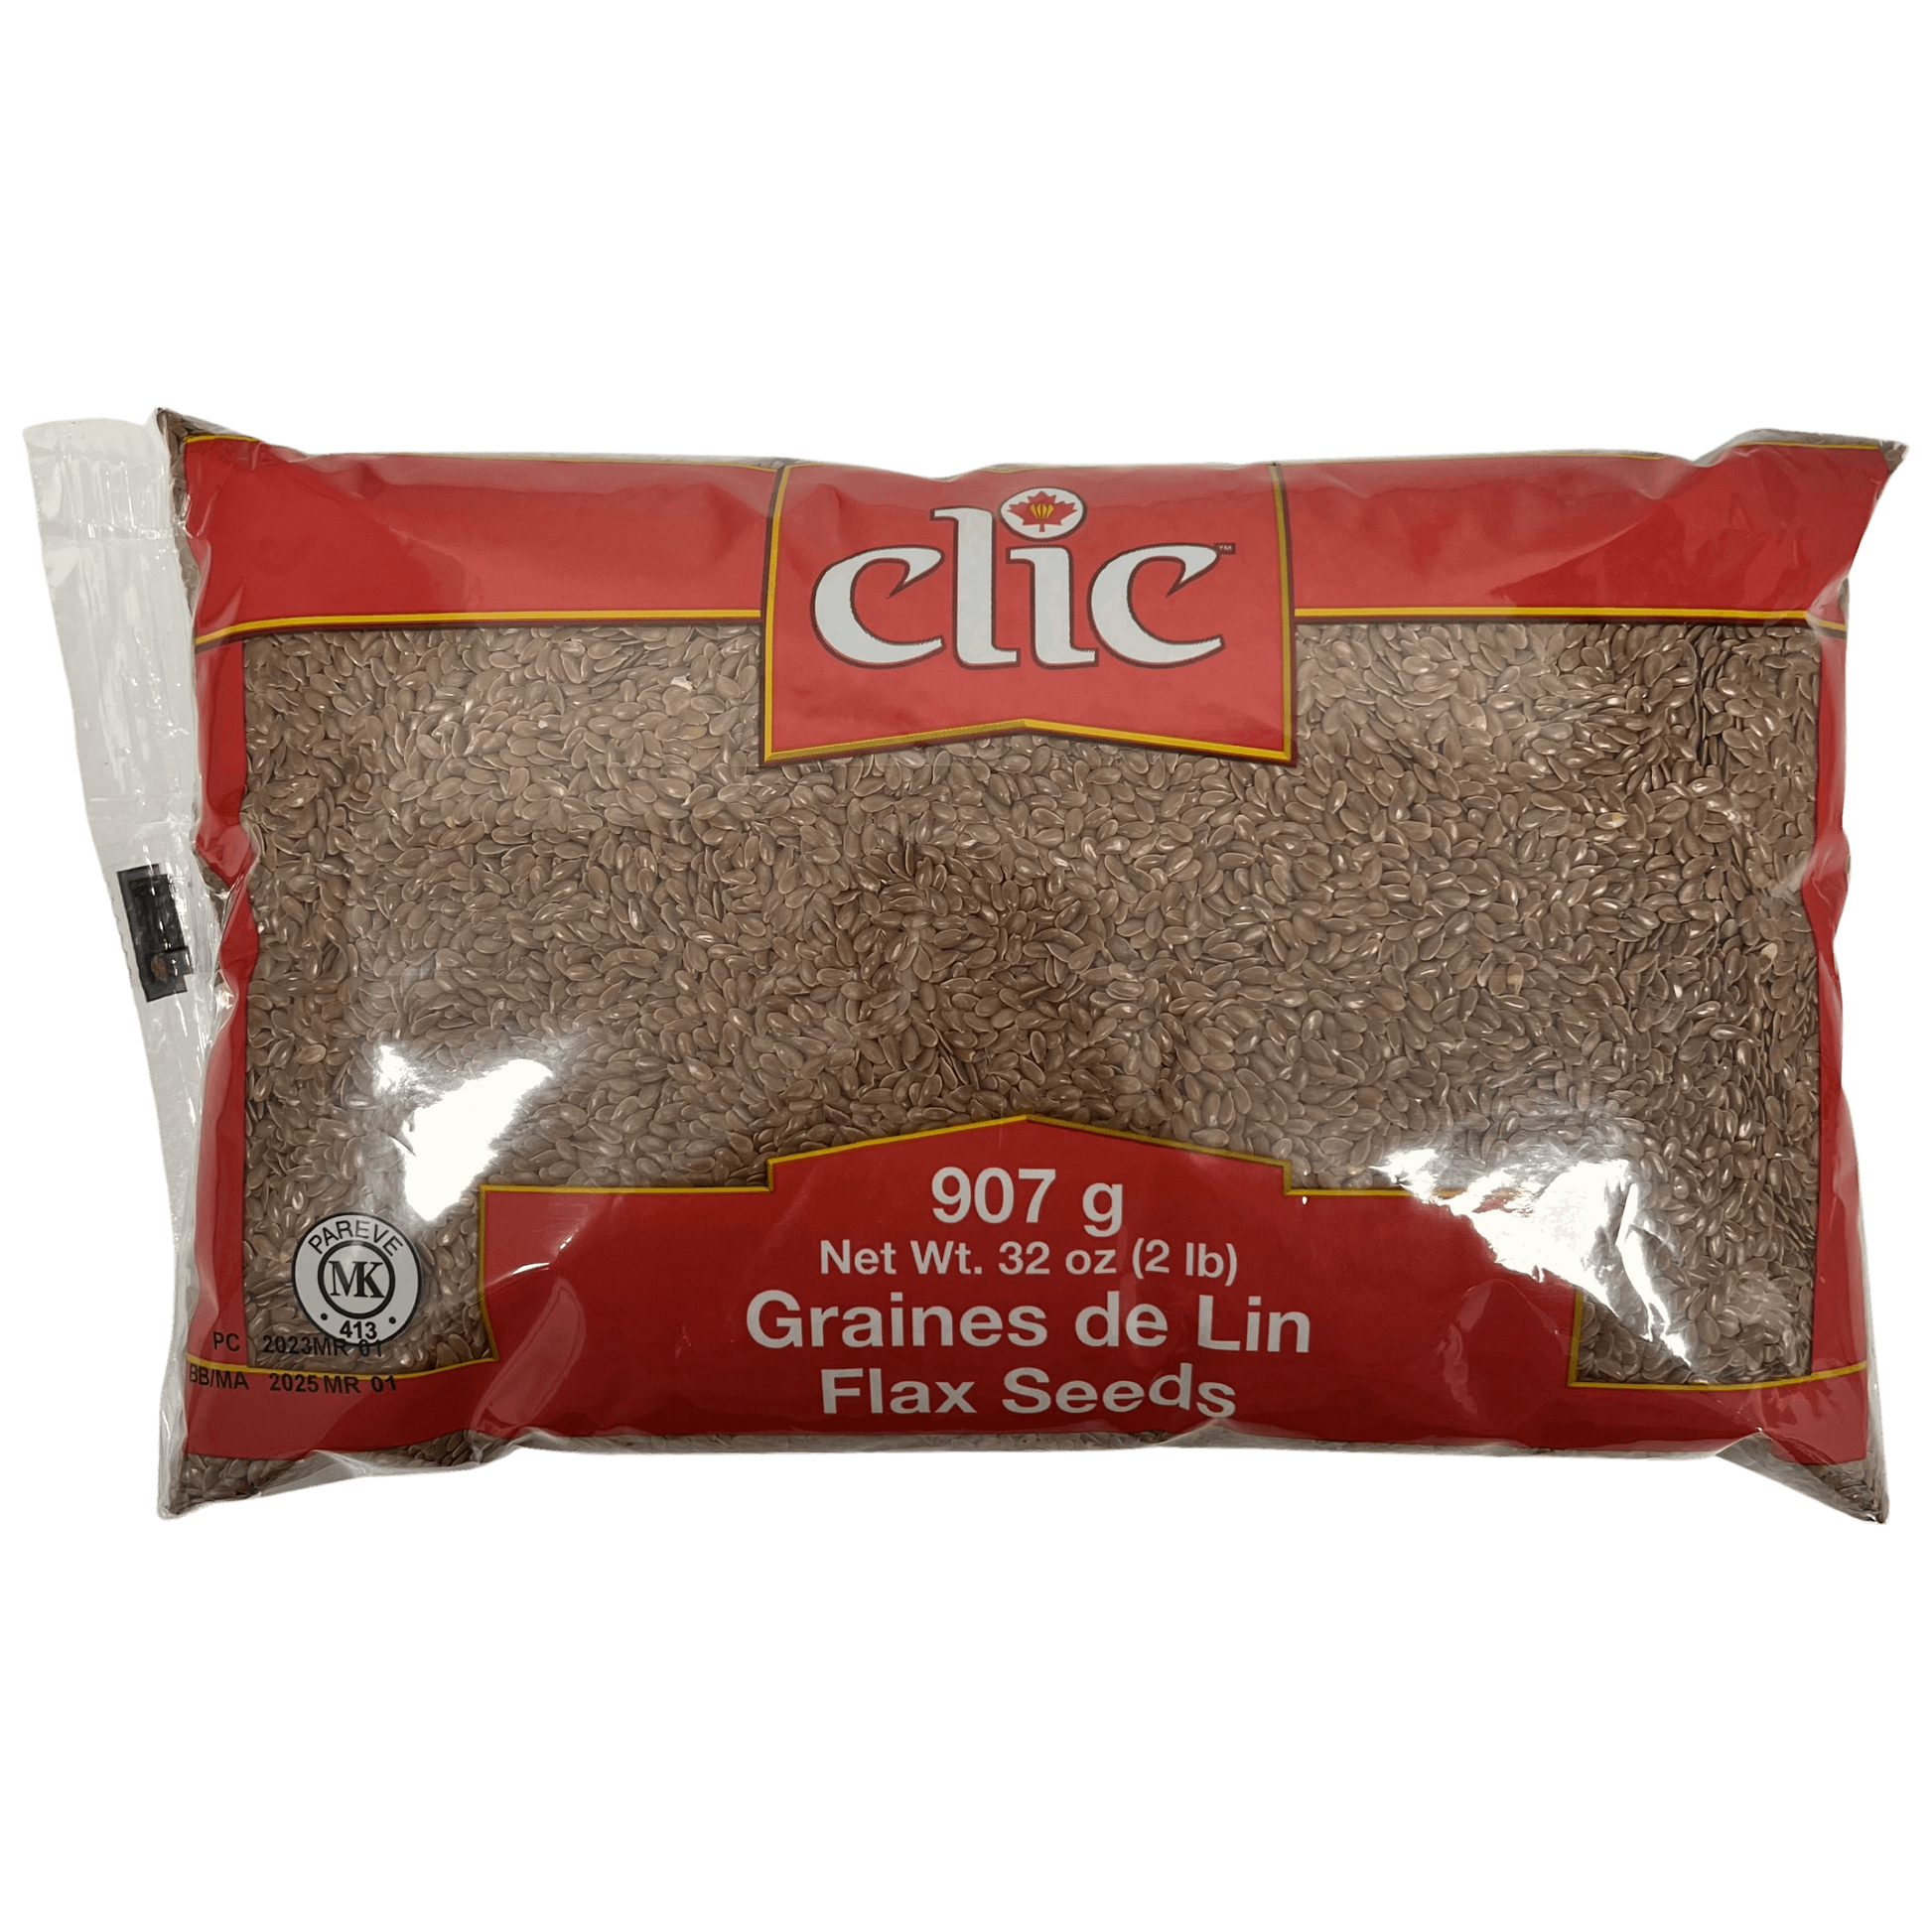 Clic Brown Flax Seeds 907g Damaski